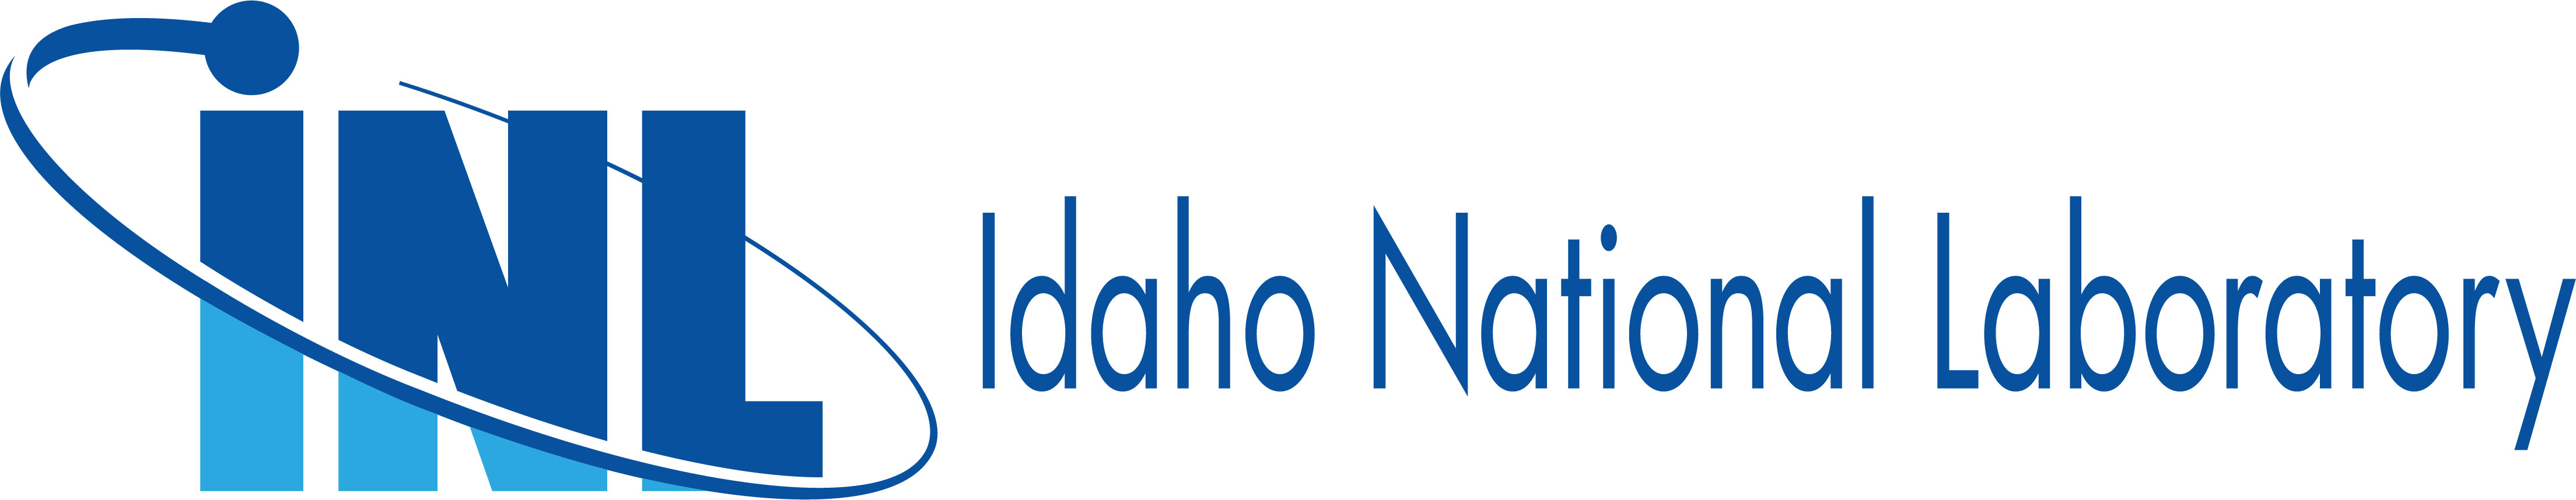 Idaho National Laboratory (INL)